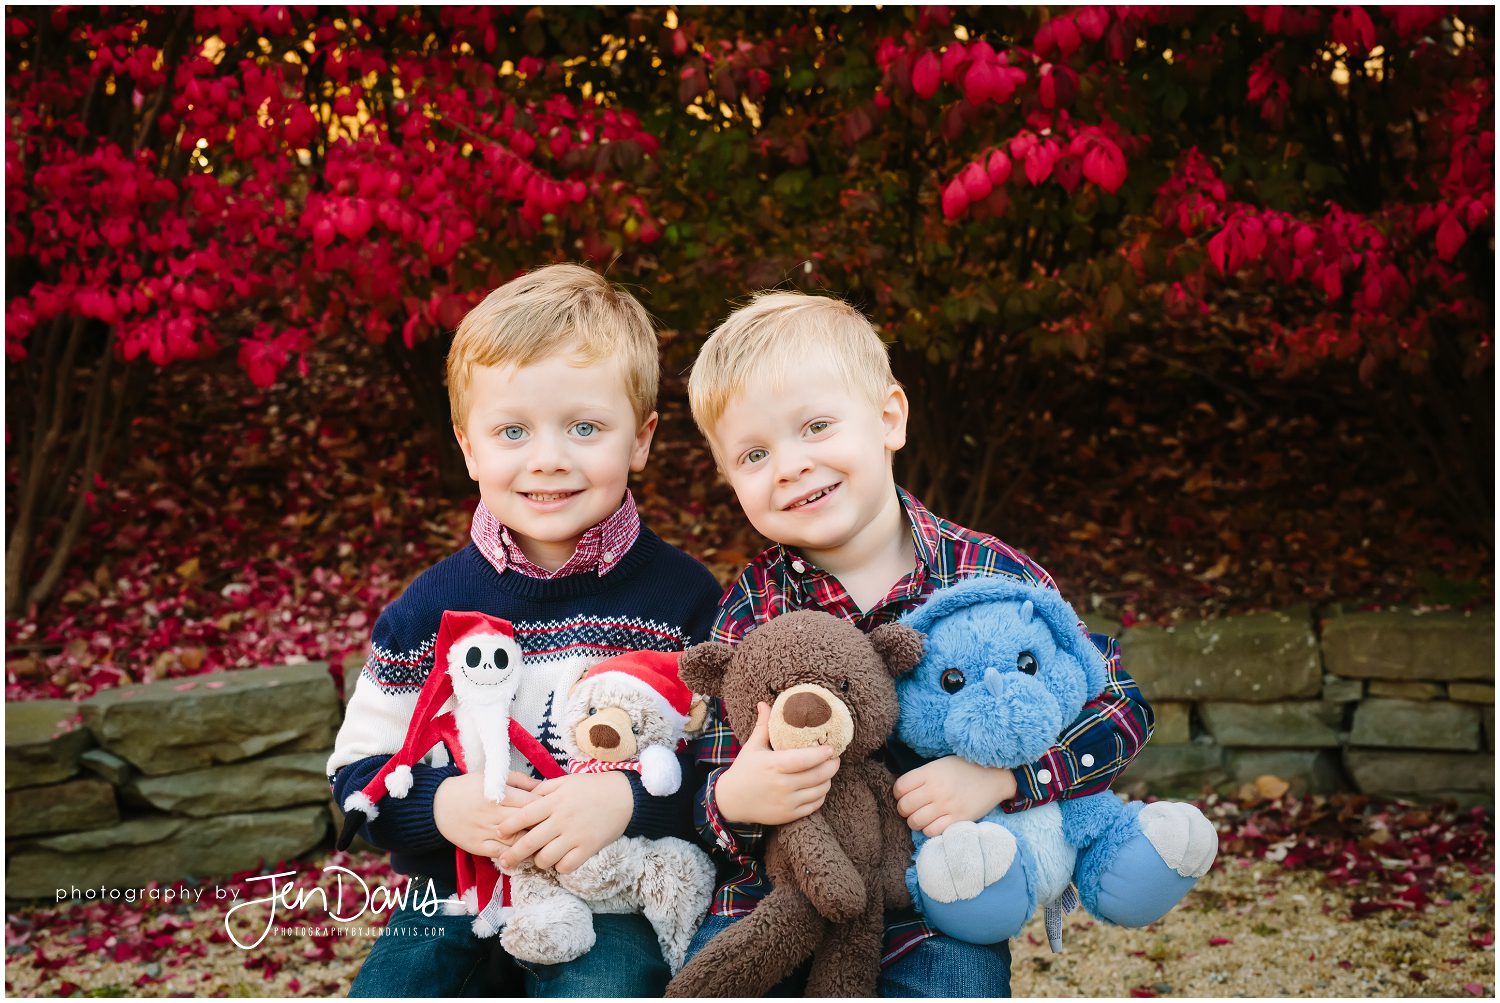 Little boys hugging their stuffed animals